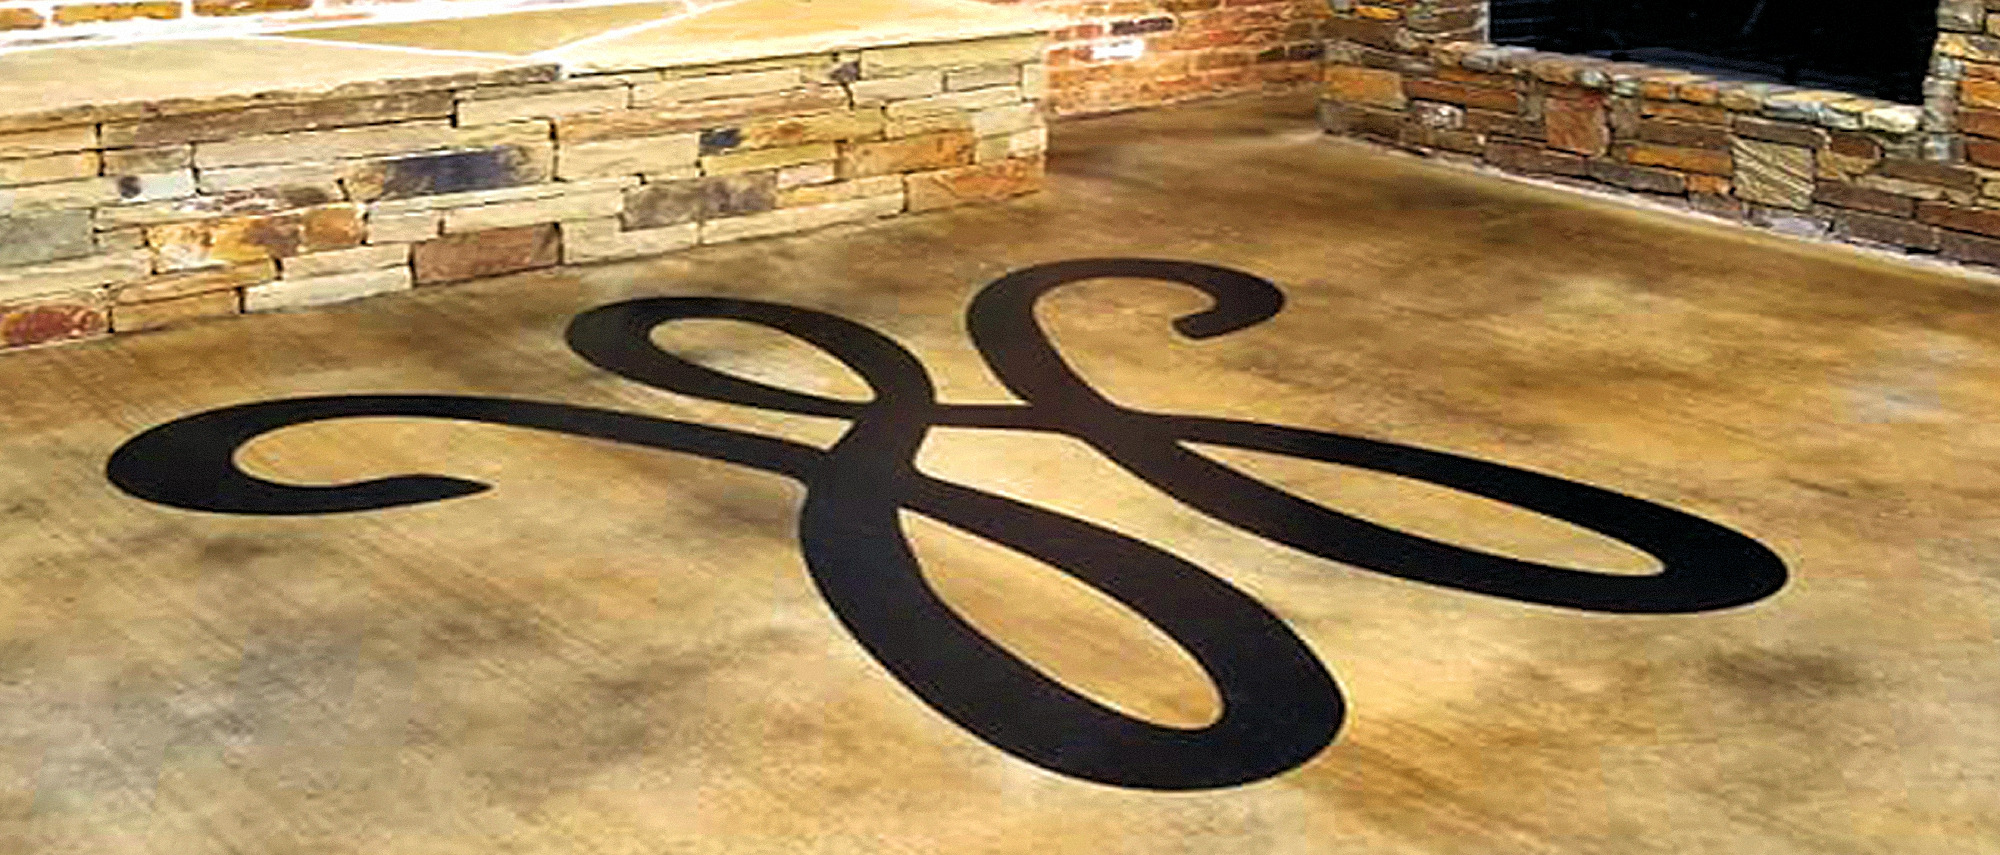 Monogrammed concrete floor